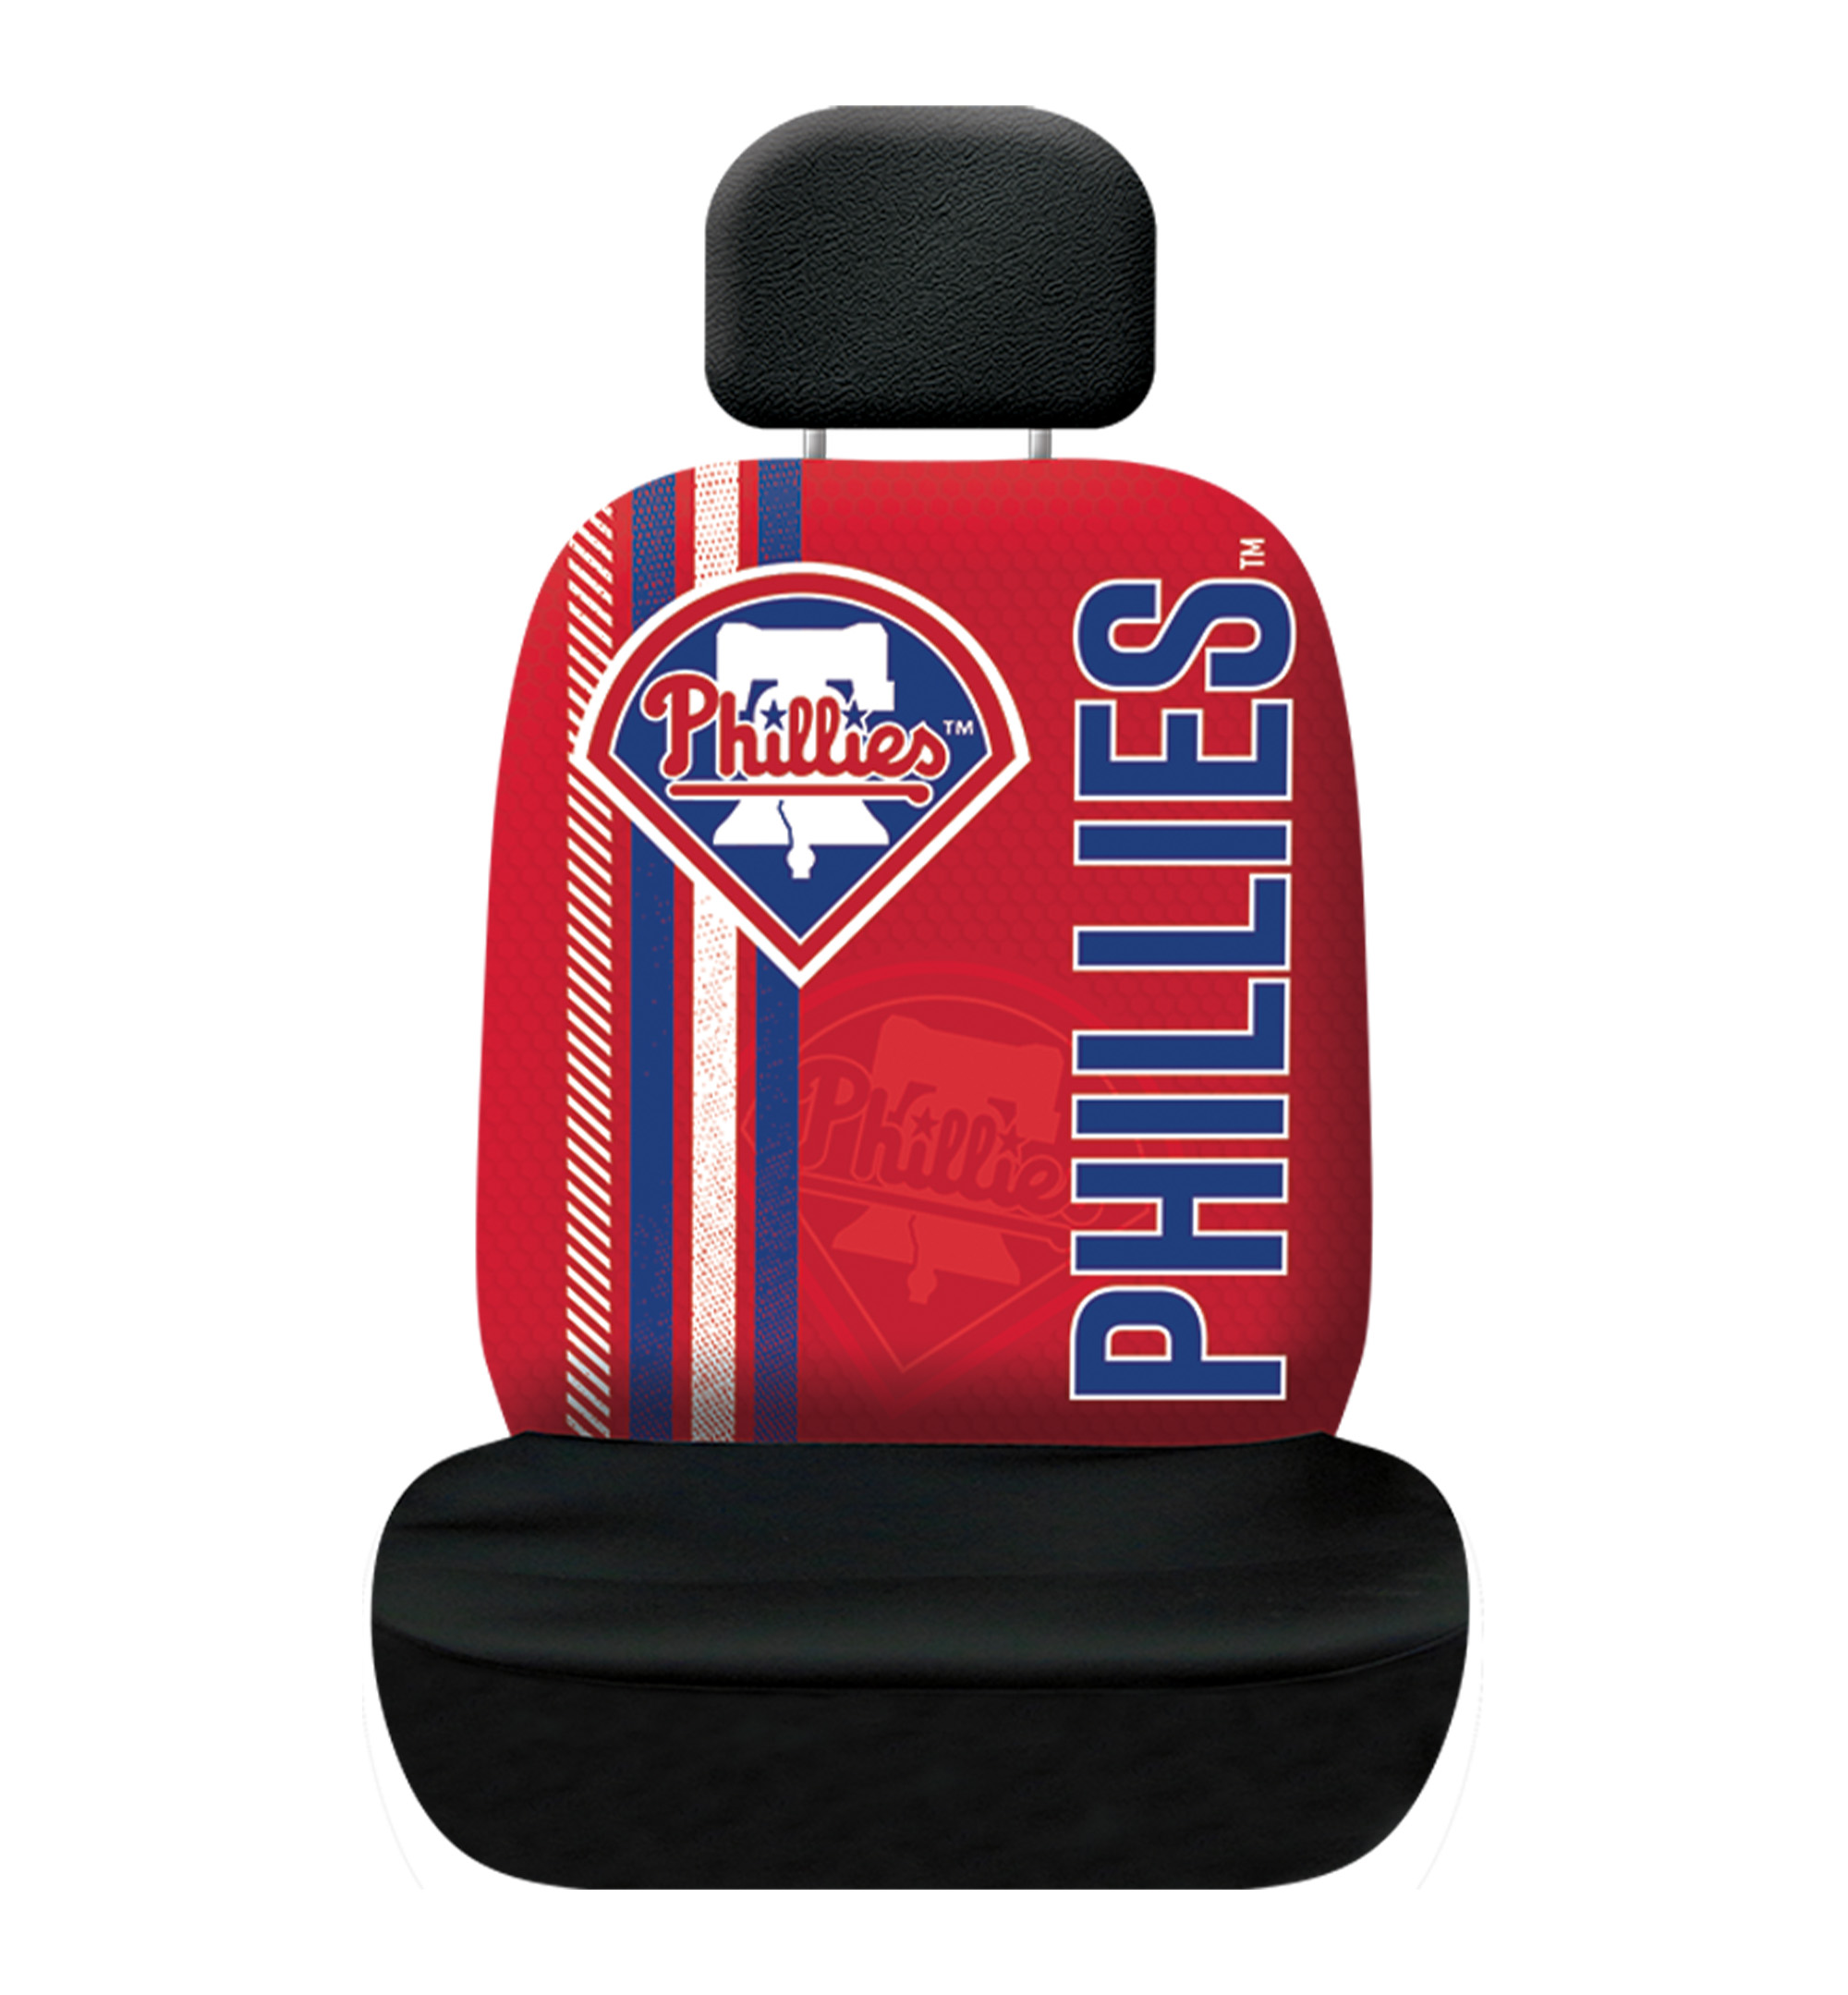 MLB Philadelphia Phillies Rally Seat Cover - image 1 of 2